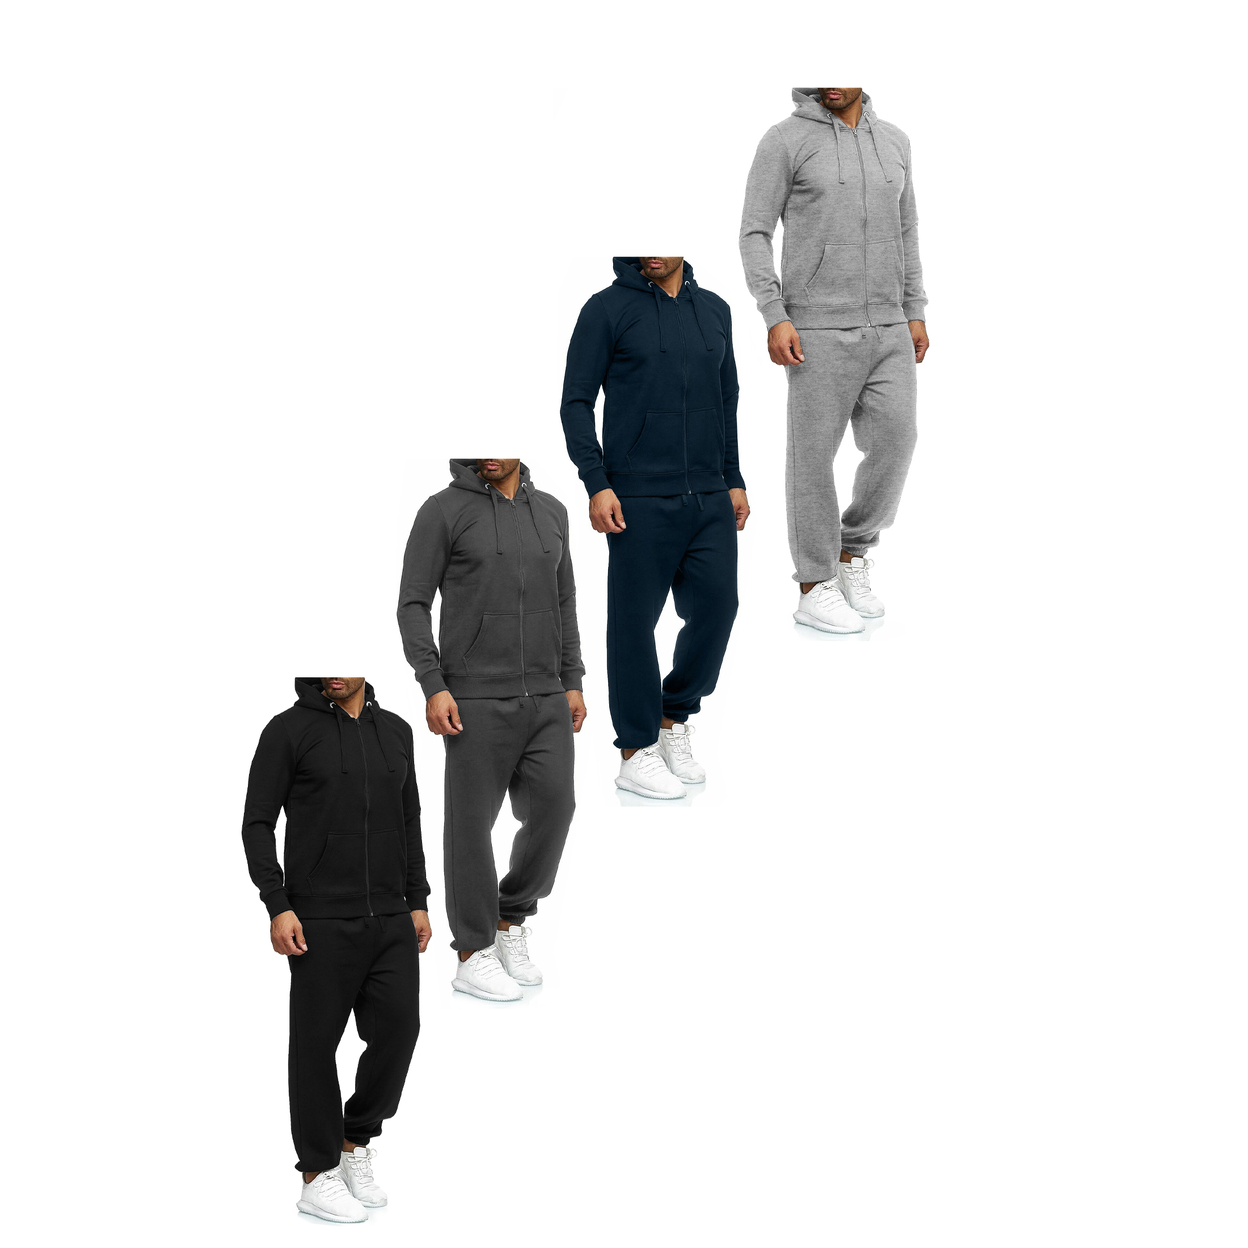 2-Pack: Men's Casual Big & Tall Athletic Active Winter Warm Fleece Lined Full Zip Tracksuit Jogger Set - Grey, Medium